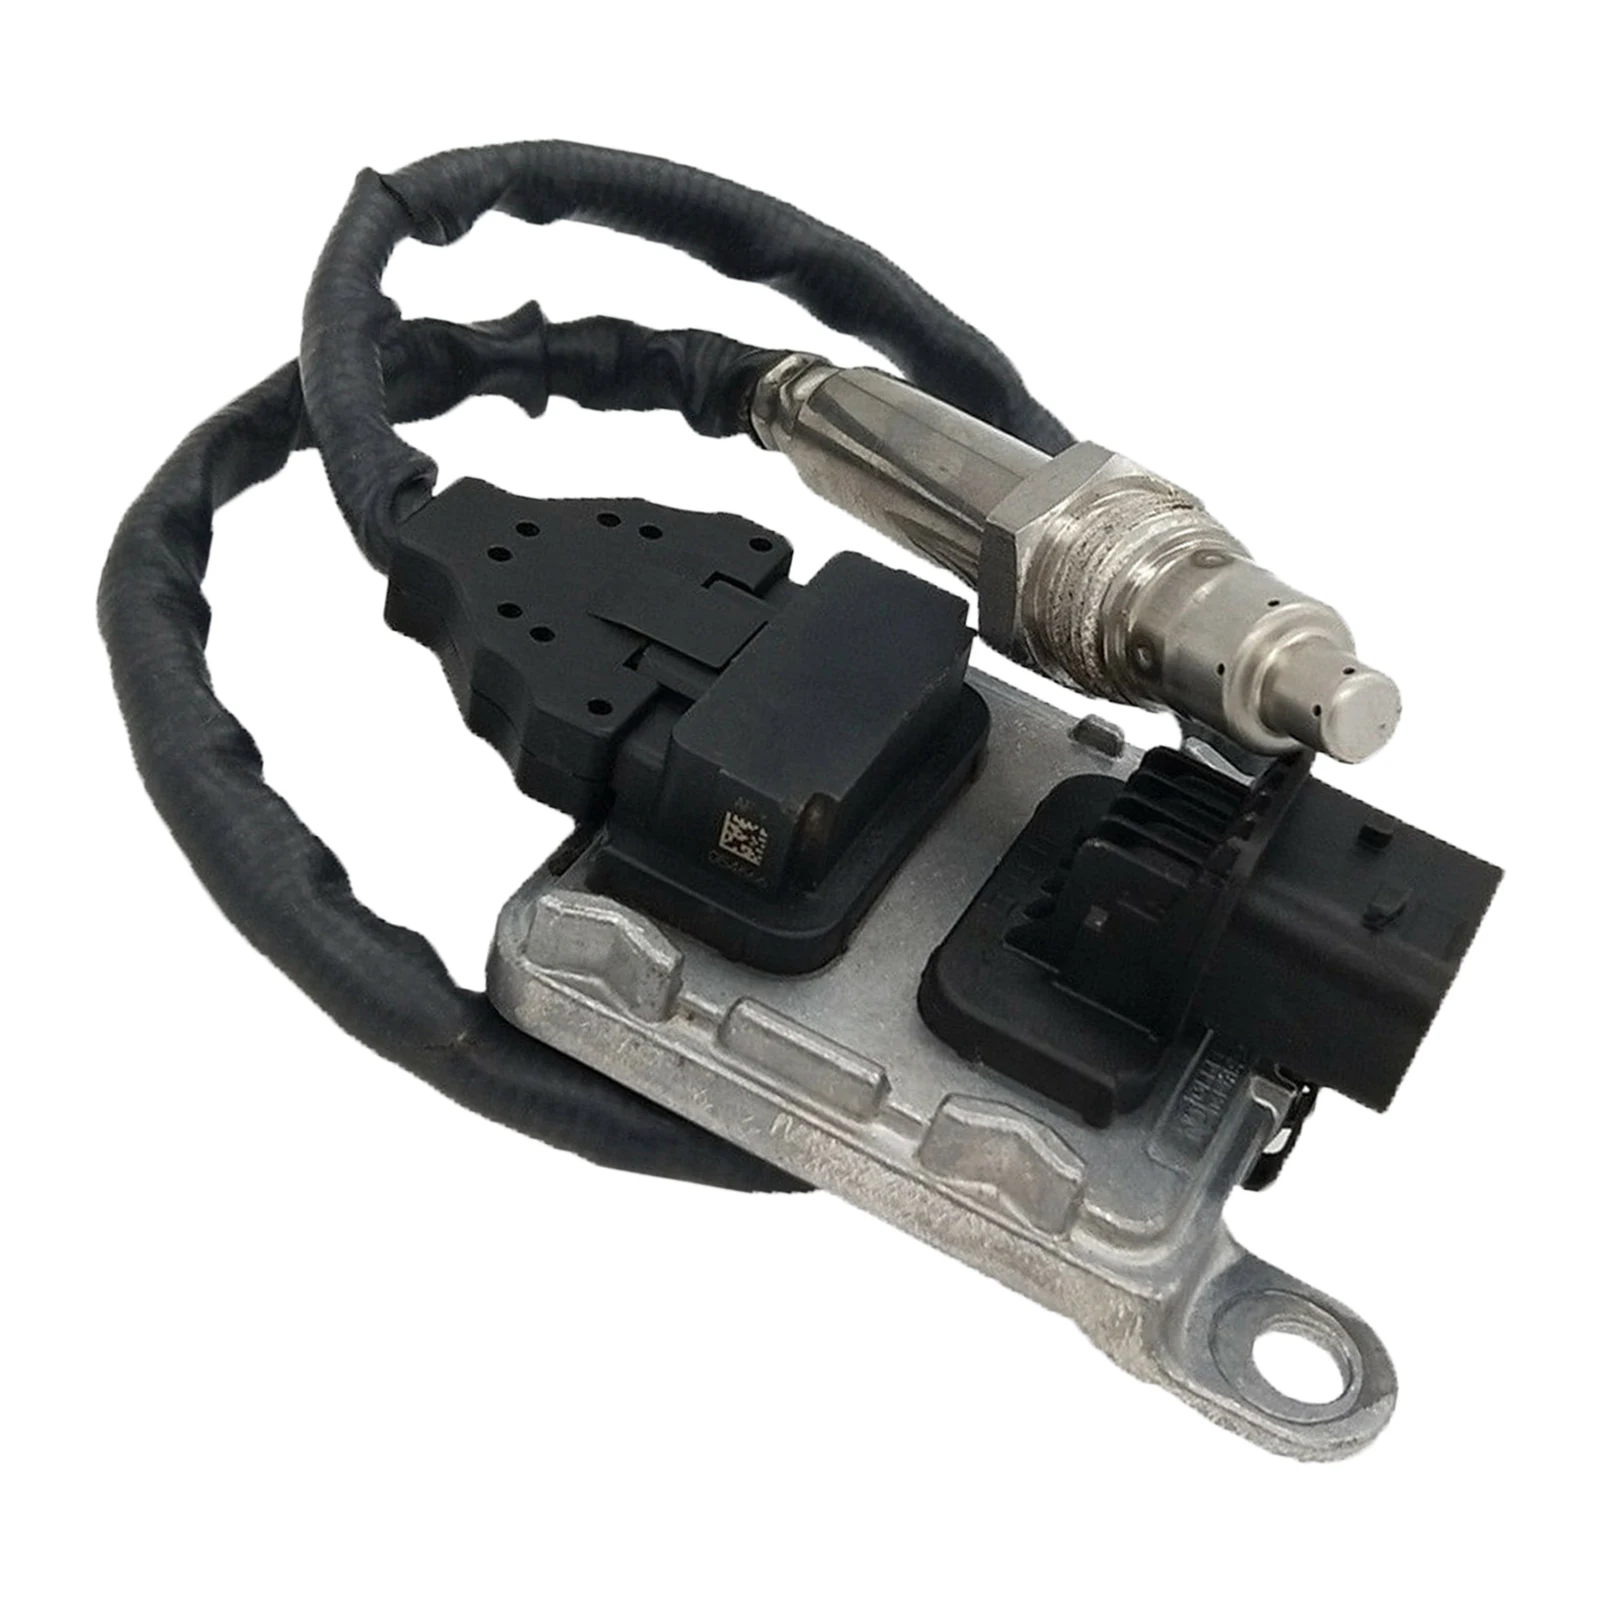 A0101531928 Nitrogen Oxide Sensor for Mercedes Detroit Engine Inlet DD13 Motor Parts Car Accessories